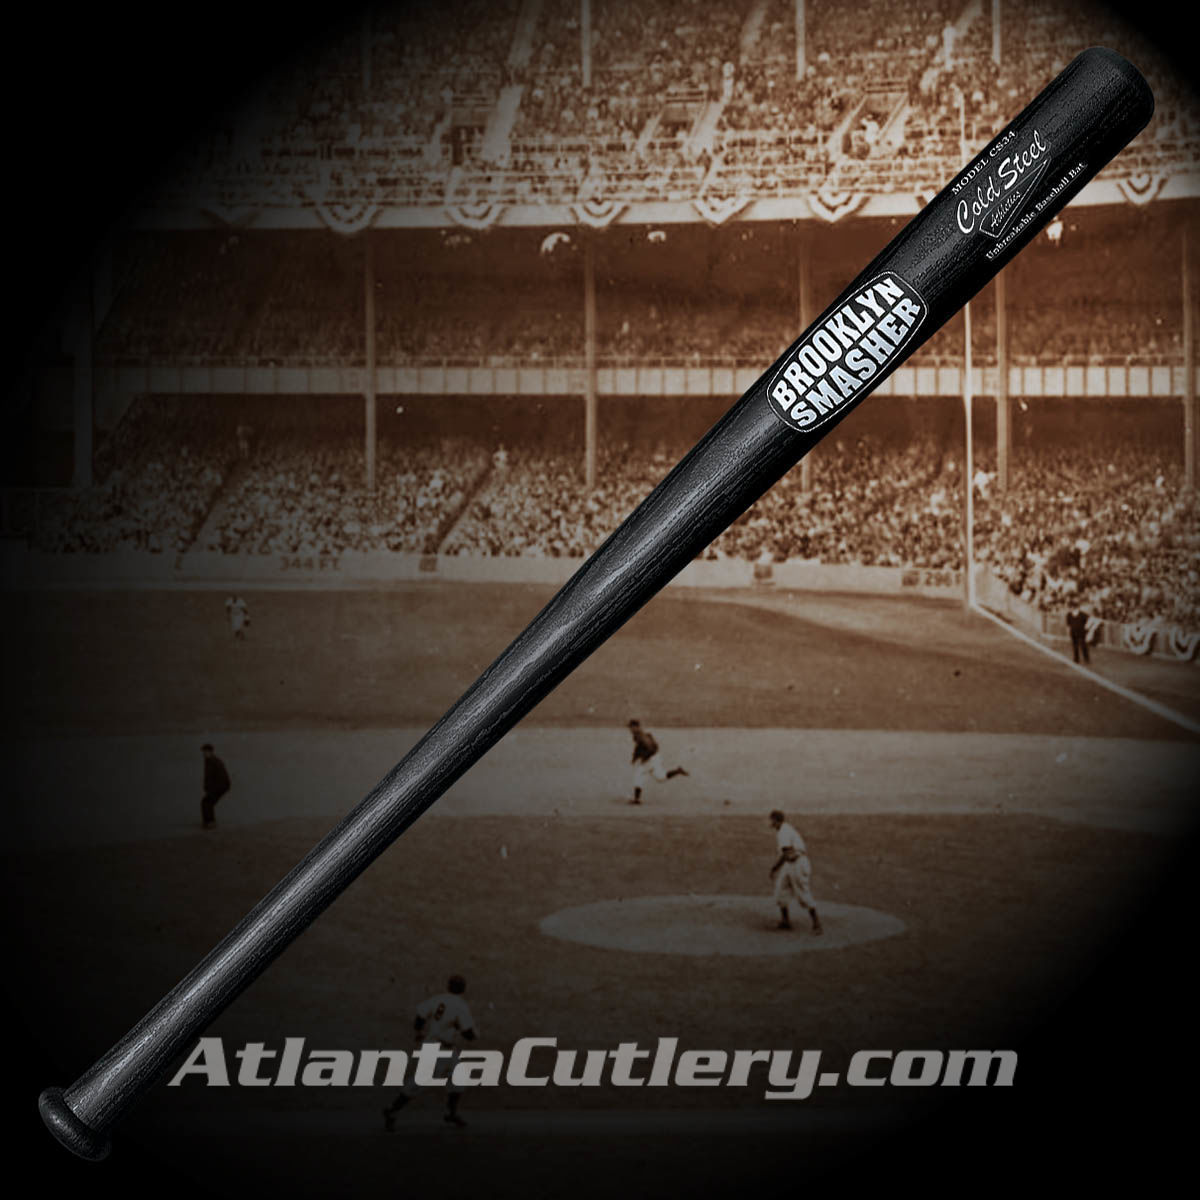 Cold Steel Brooklyn Smasher Self Defense Baseball Bat Molded out of high-impact polypropylene